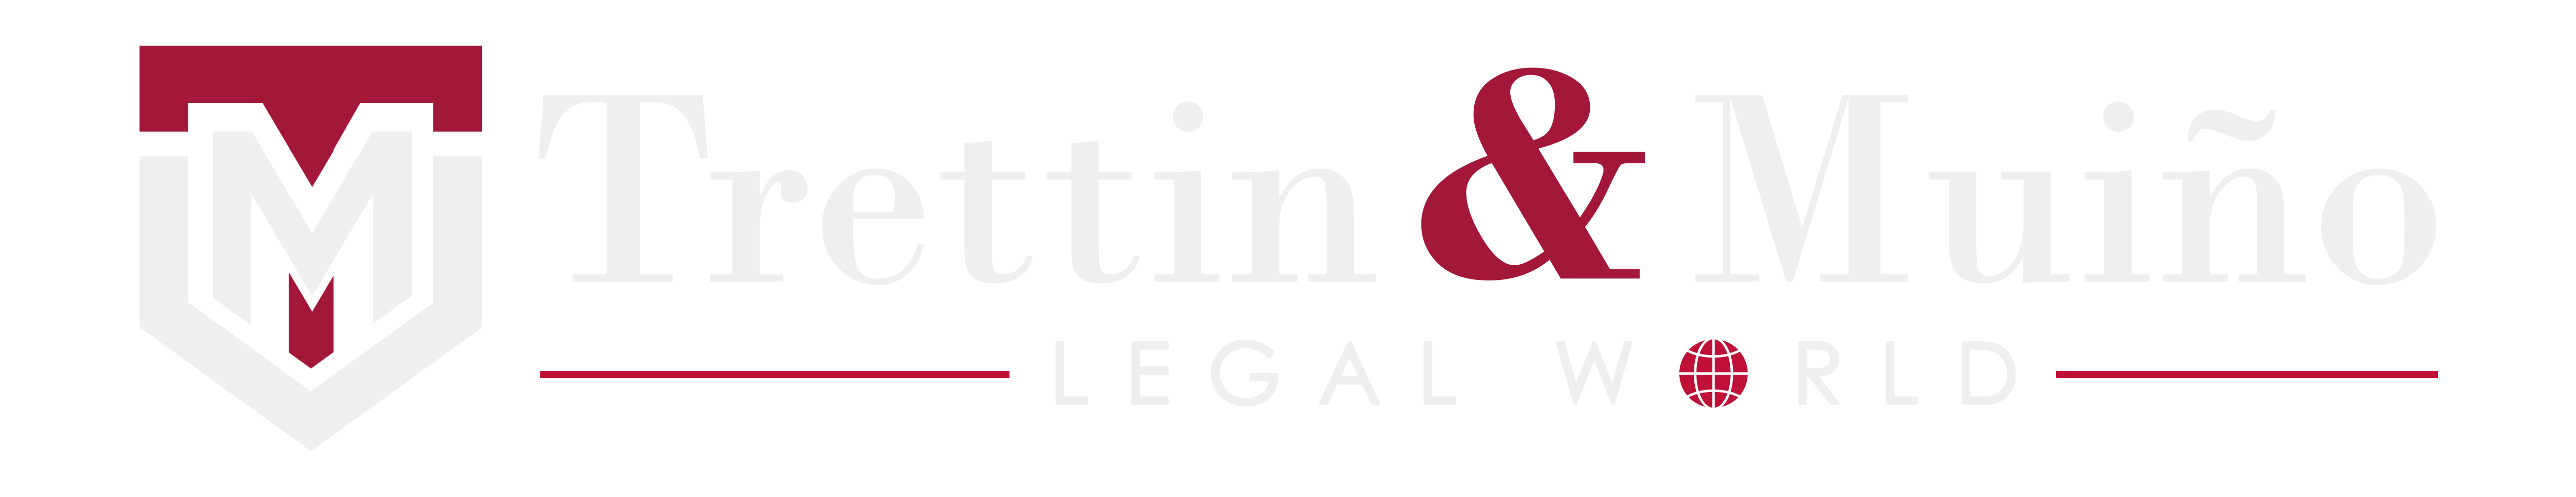 Trettin & Muiño Legal World